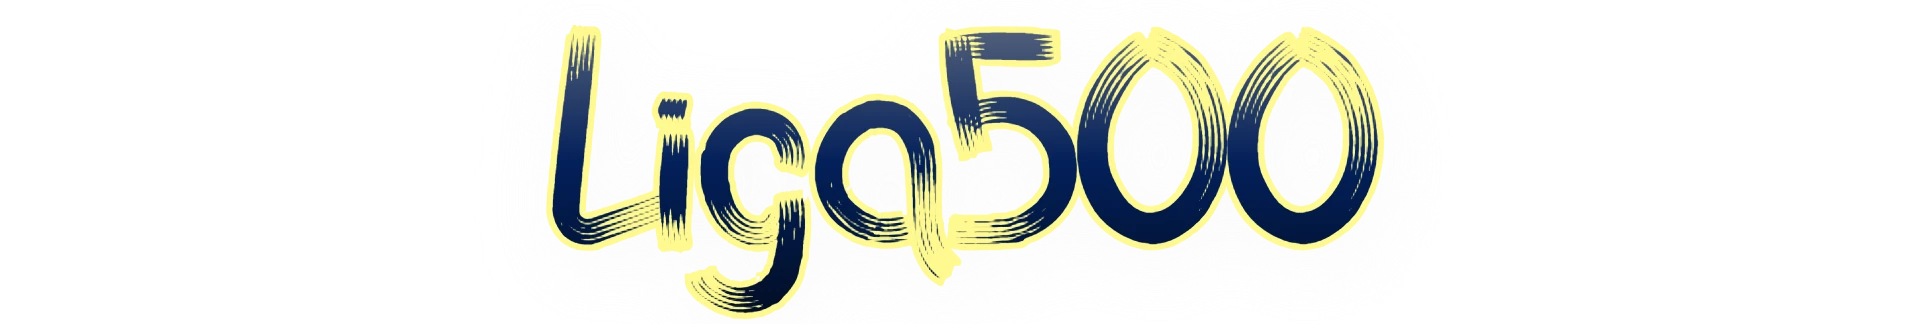 Liga500